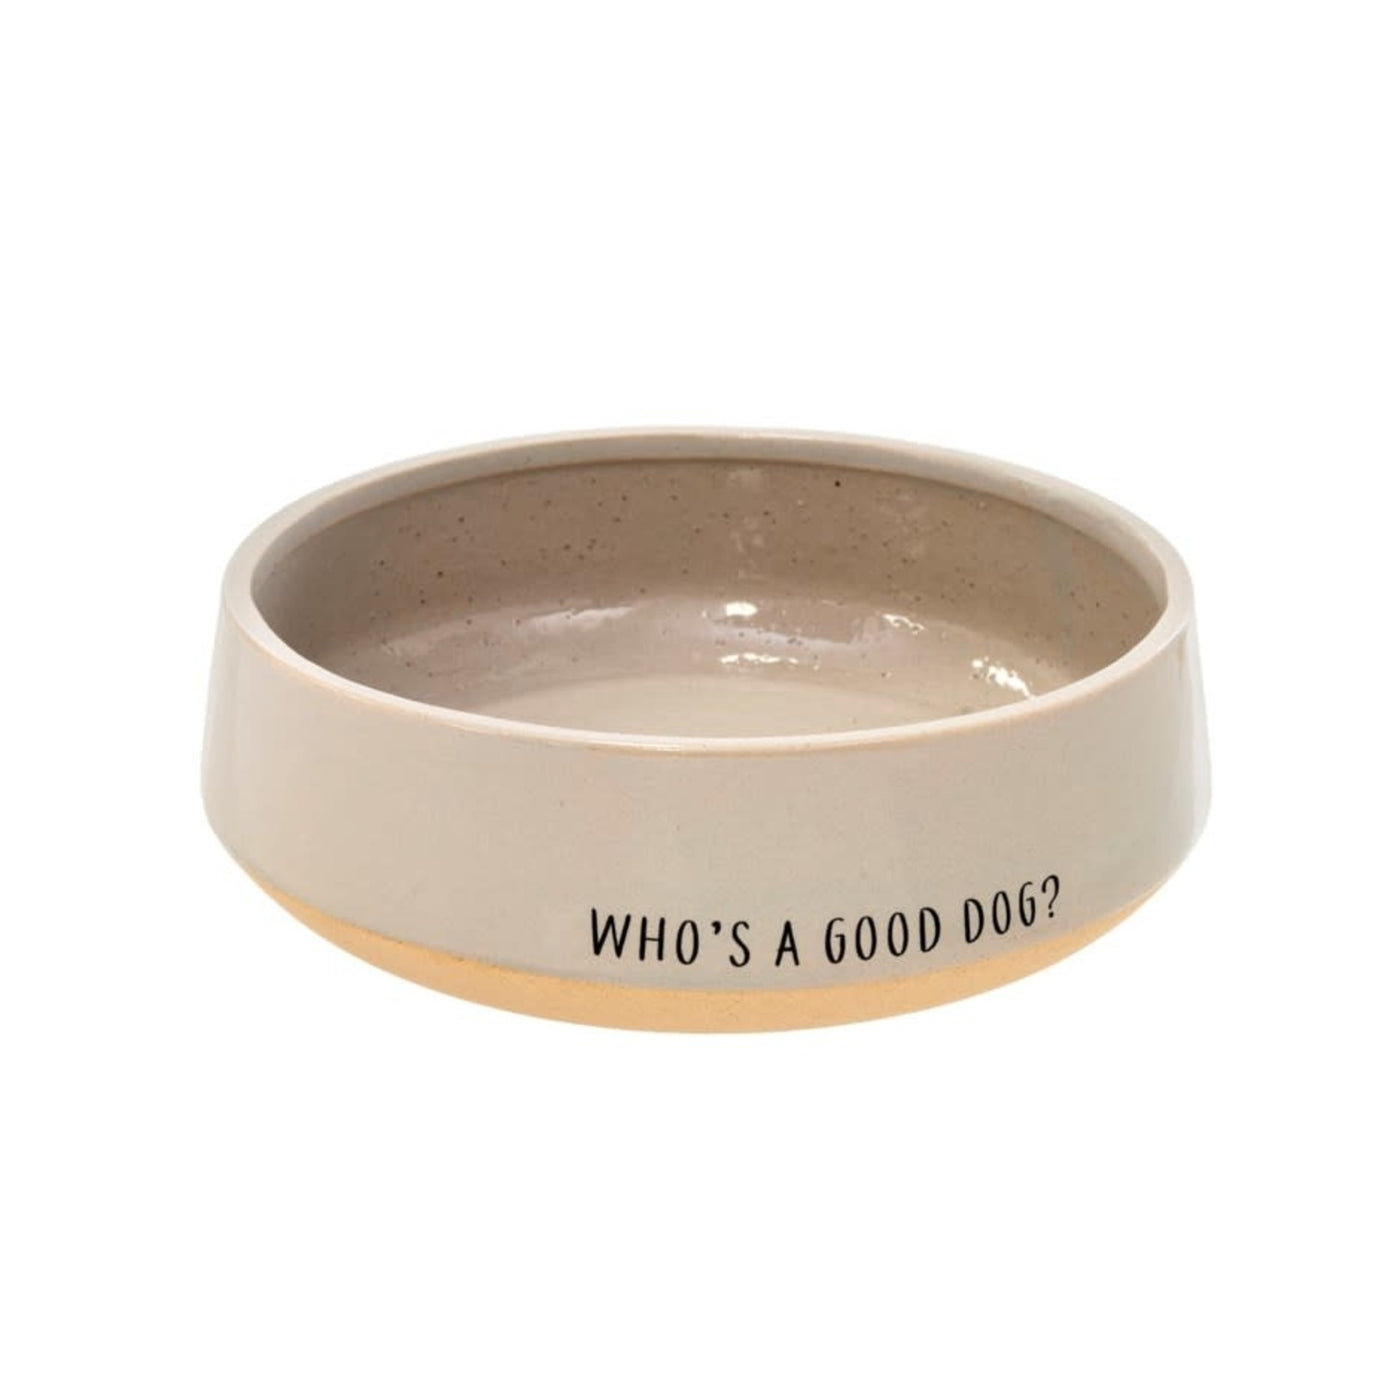 Who’s a Good Dog Bowl